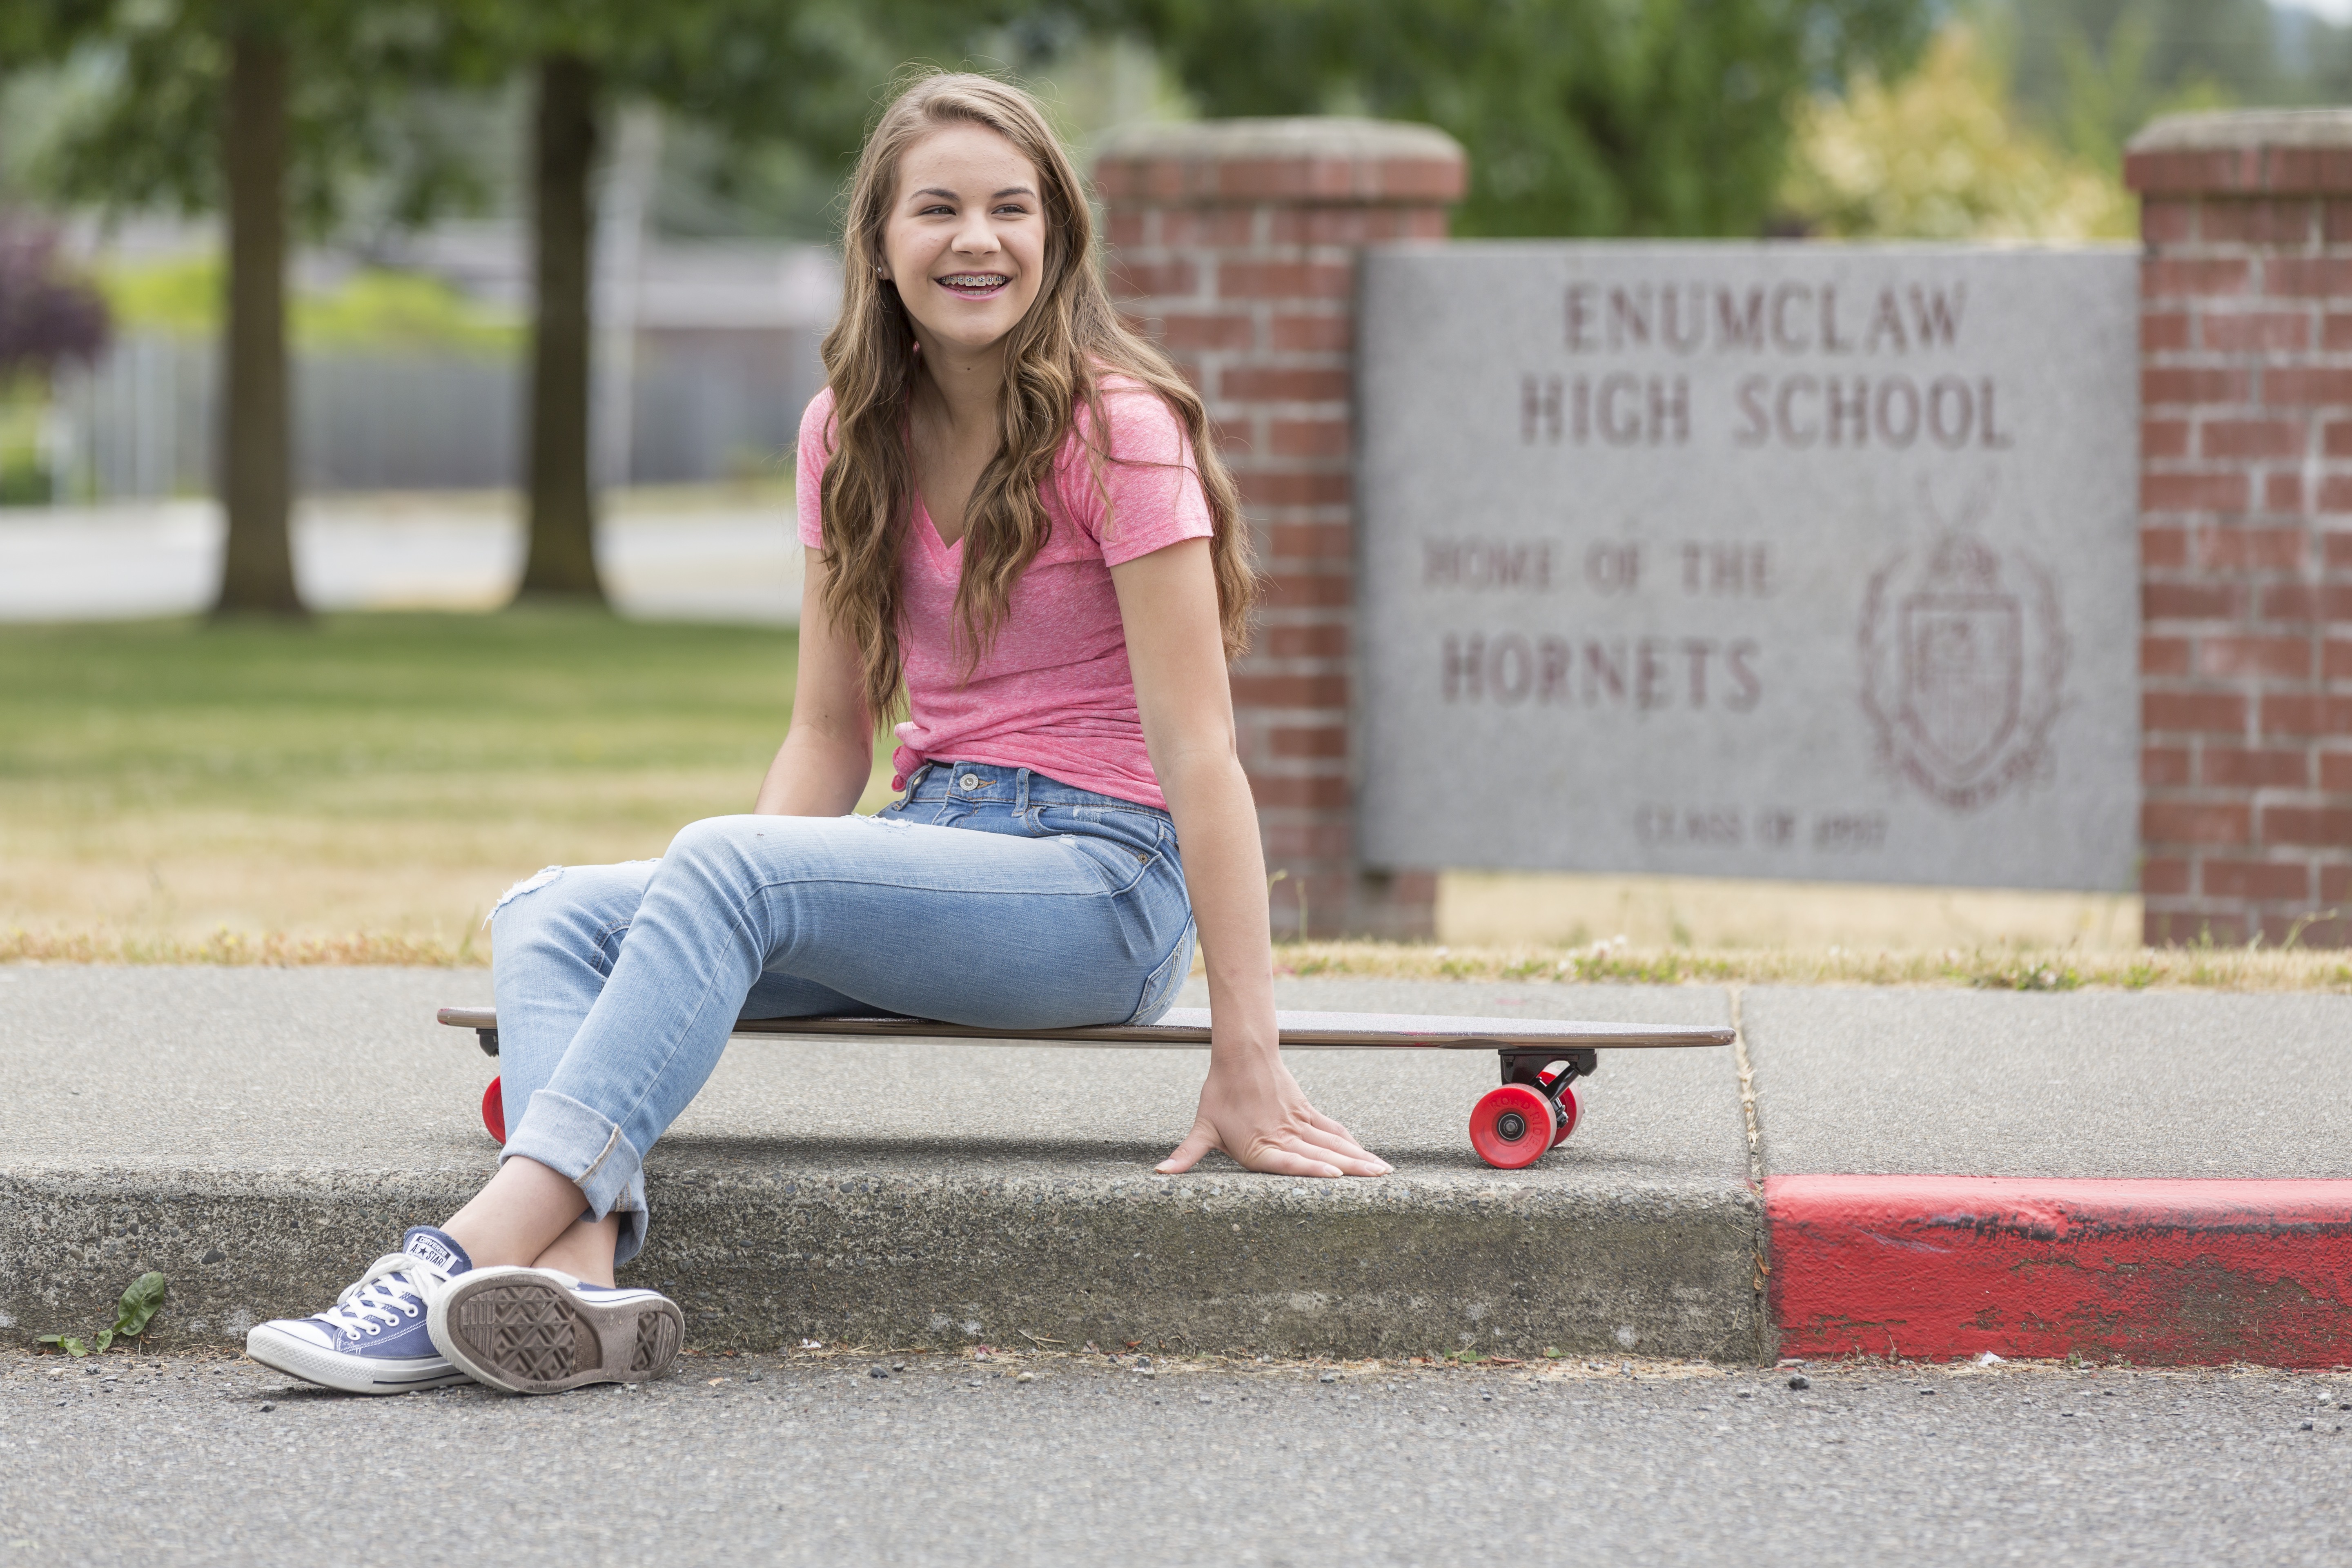 teenage girl outside a school on a skateboard